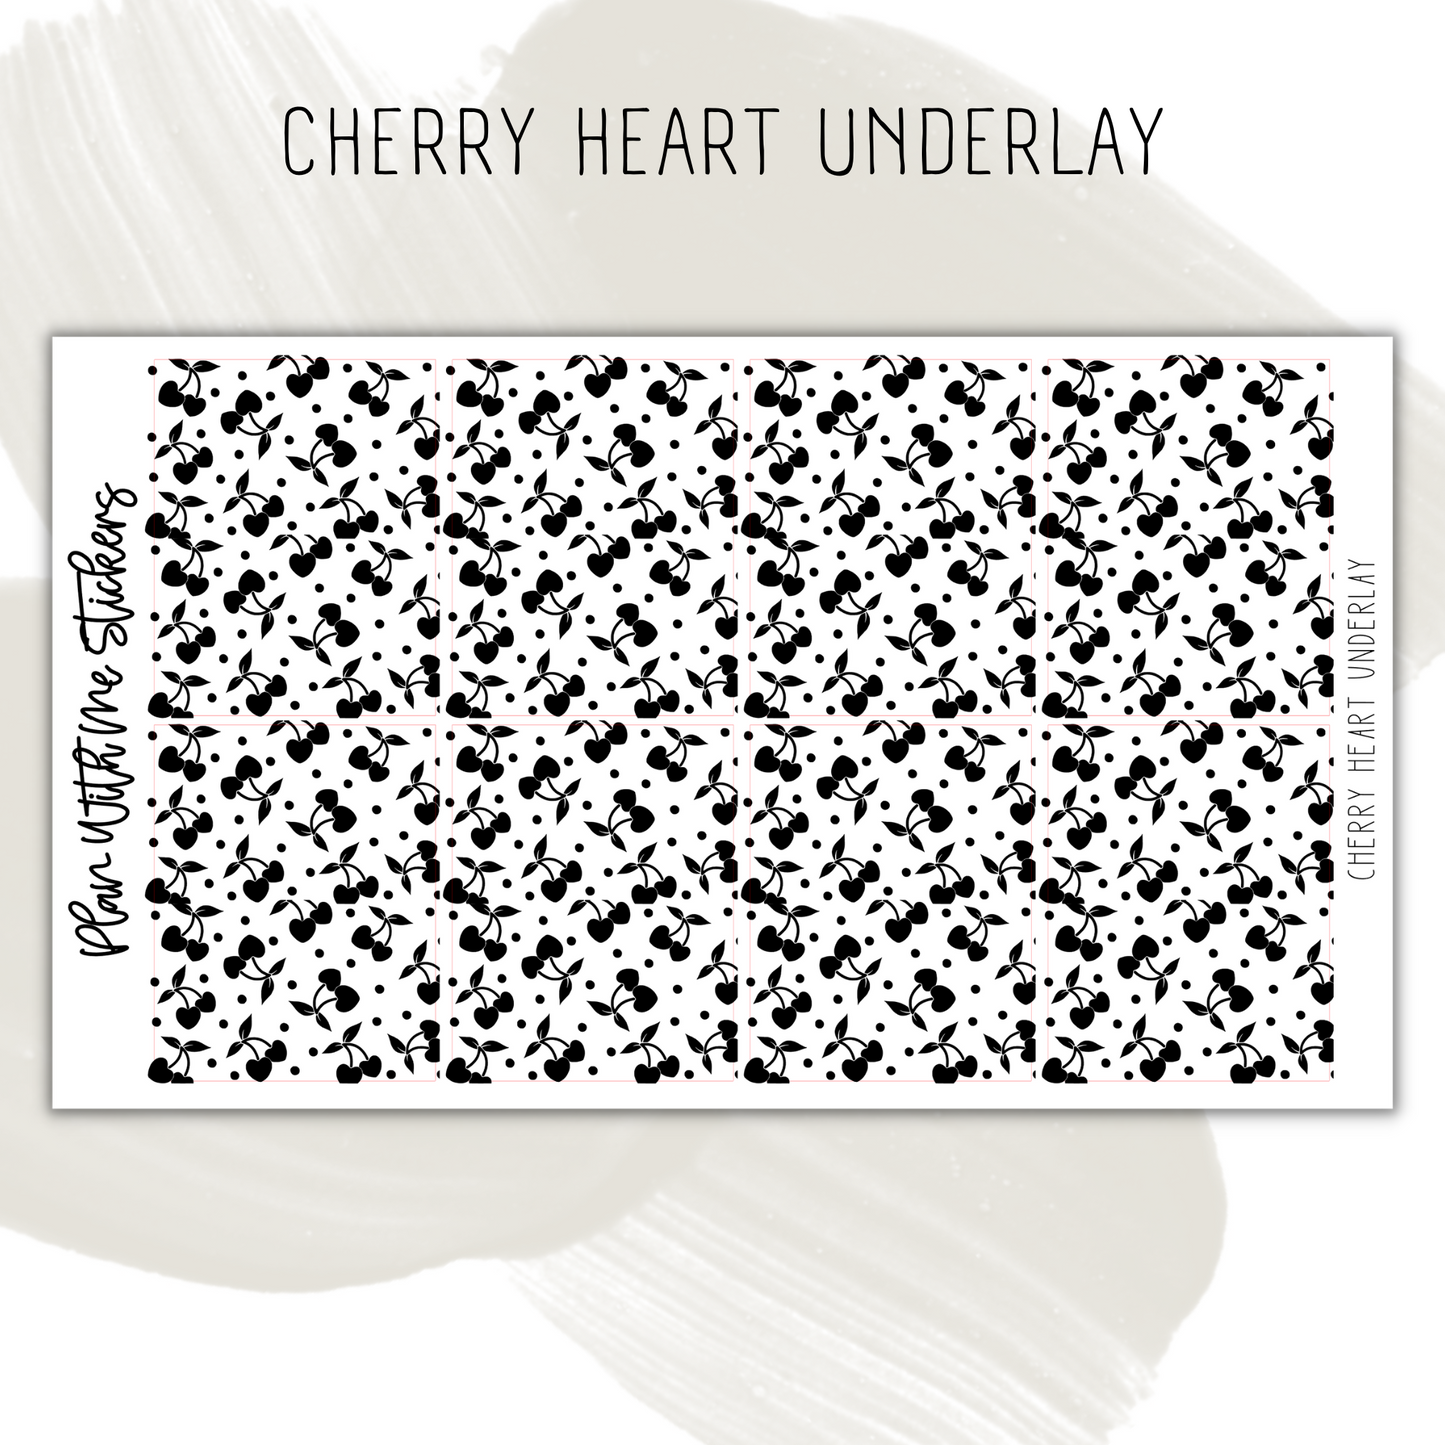 Cherry Heart Underlay